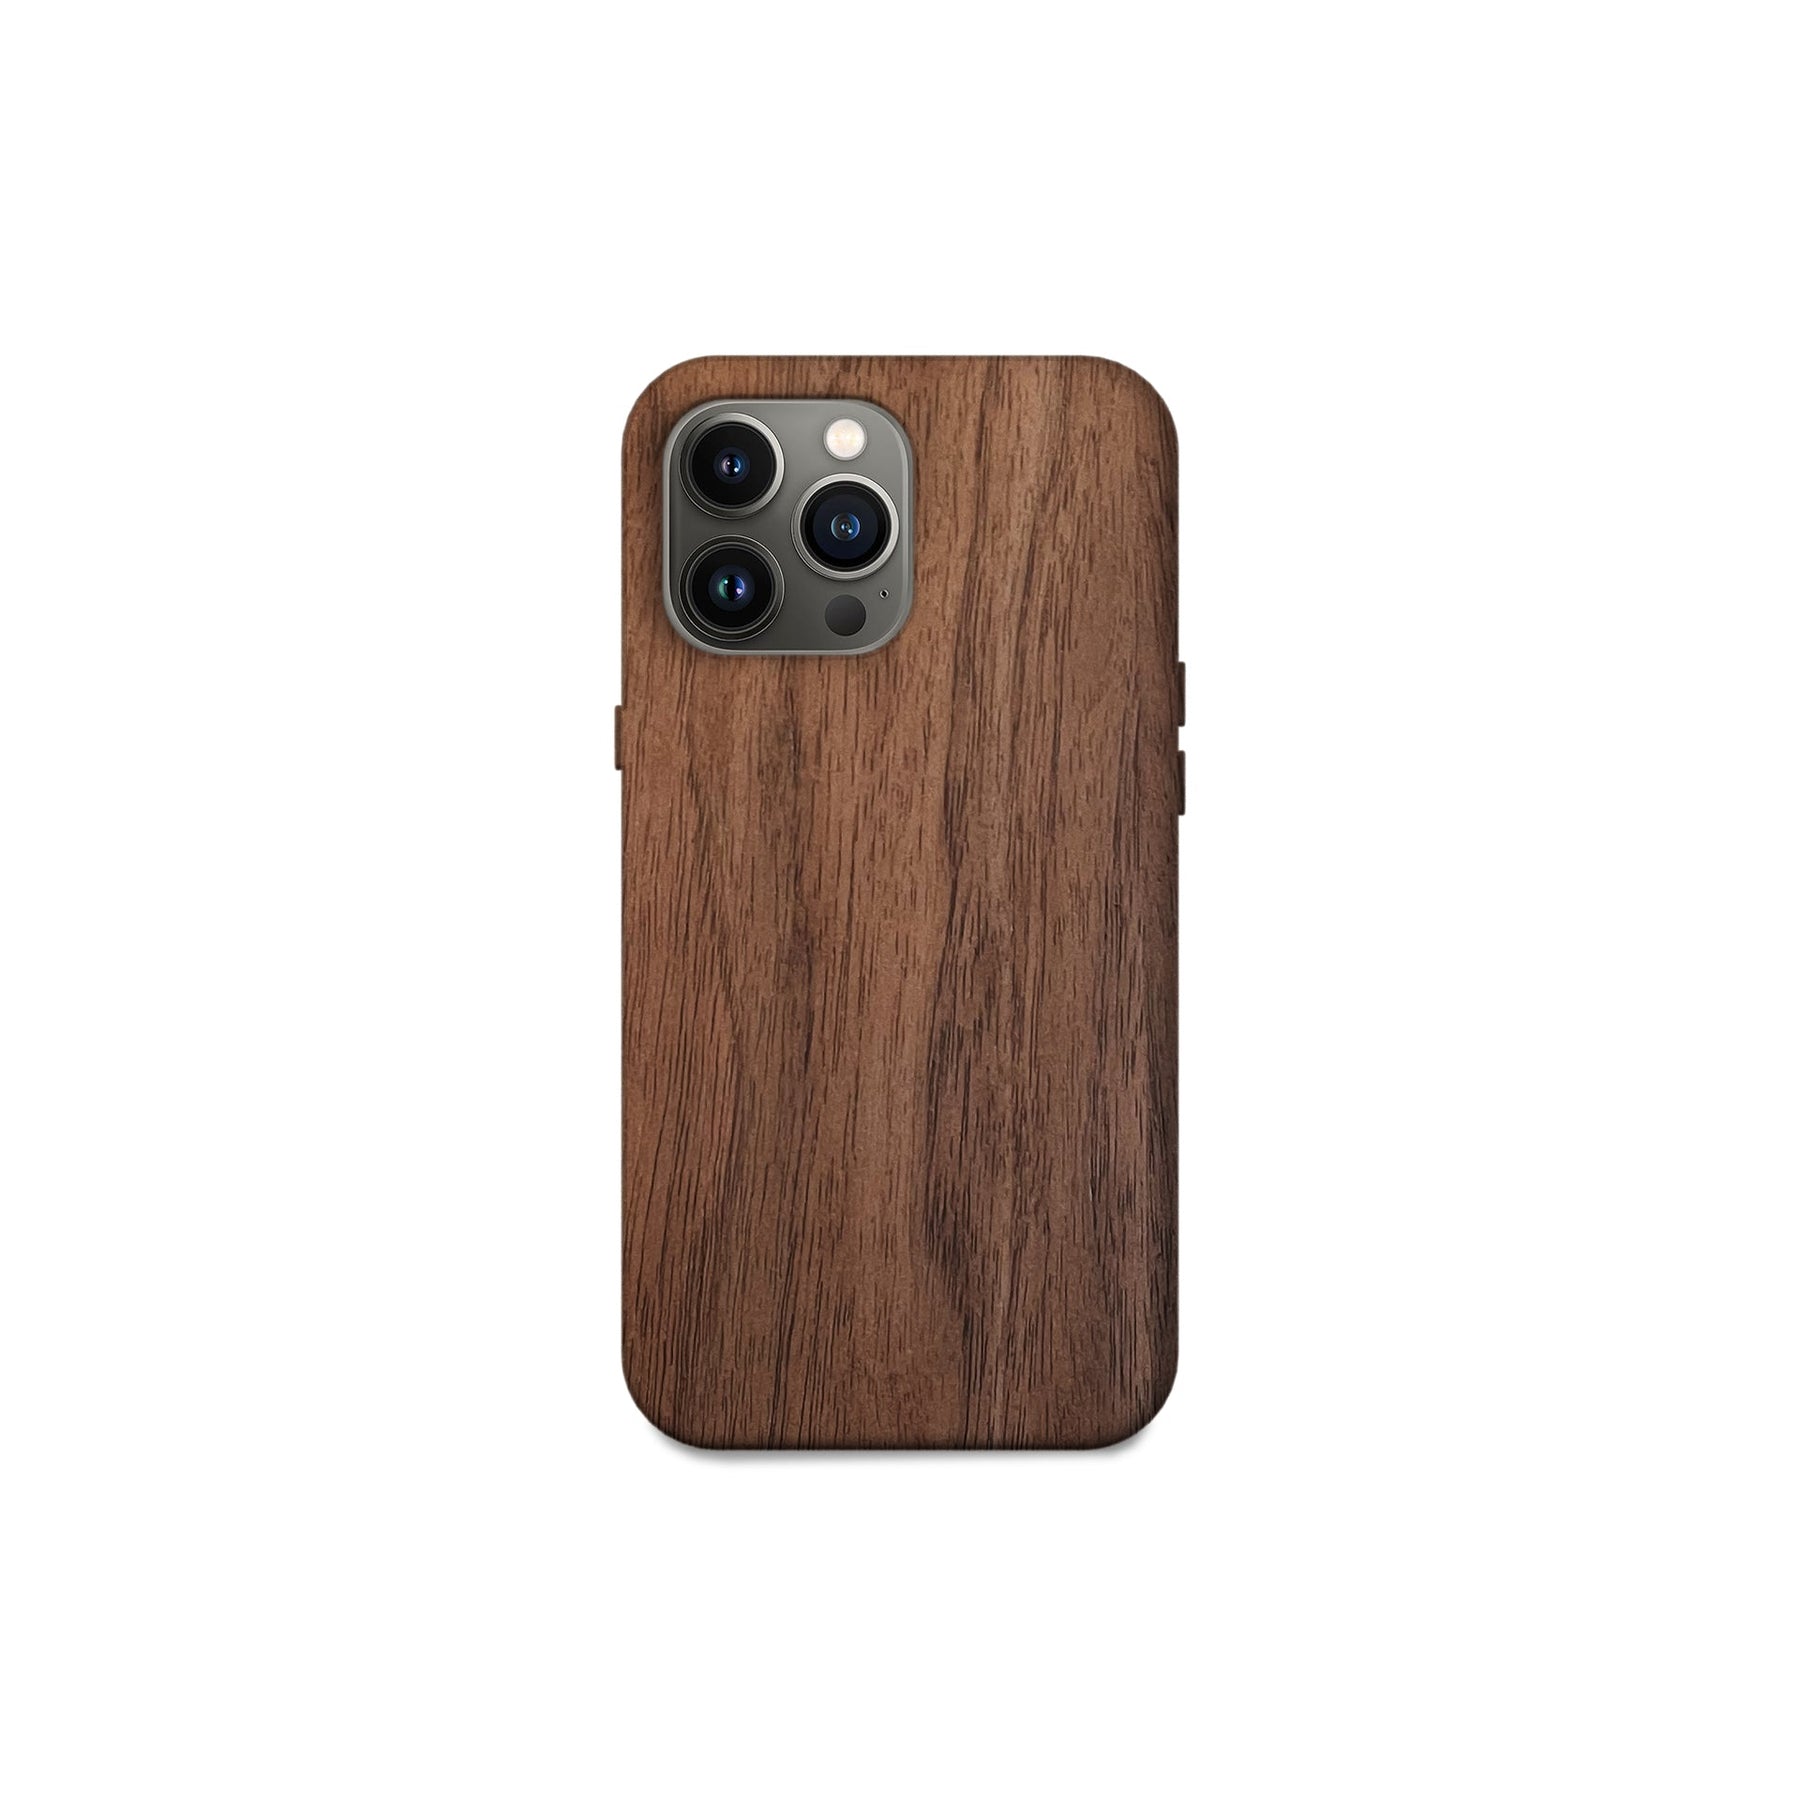 Legacy Wood Phone Case Handmade in USA for older smartphone models.